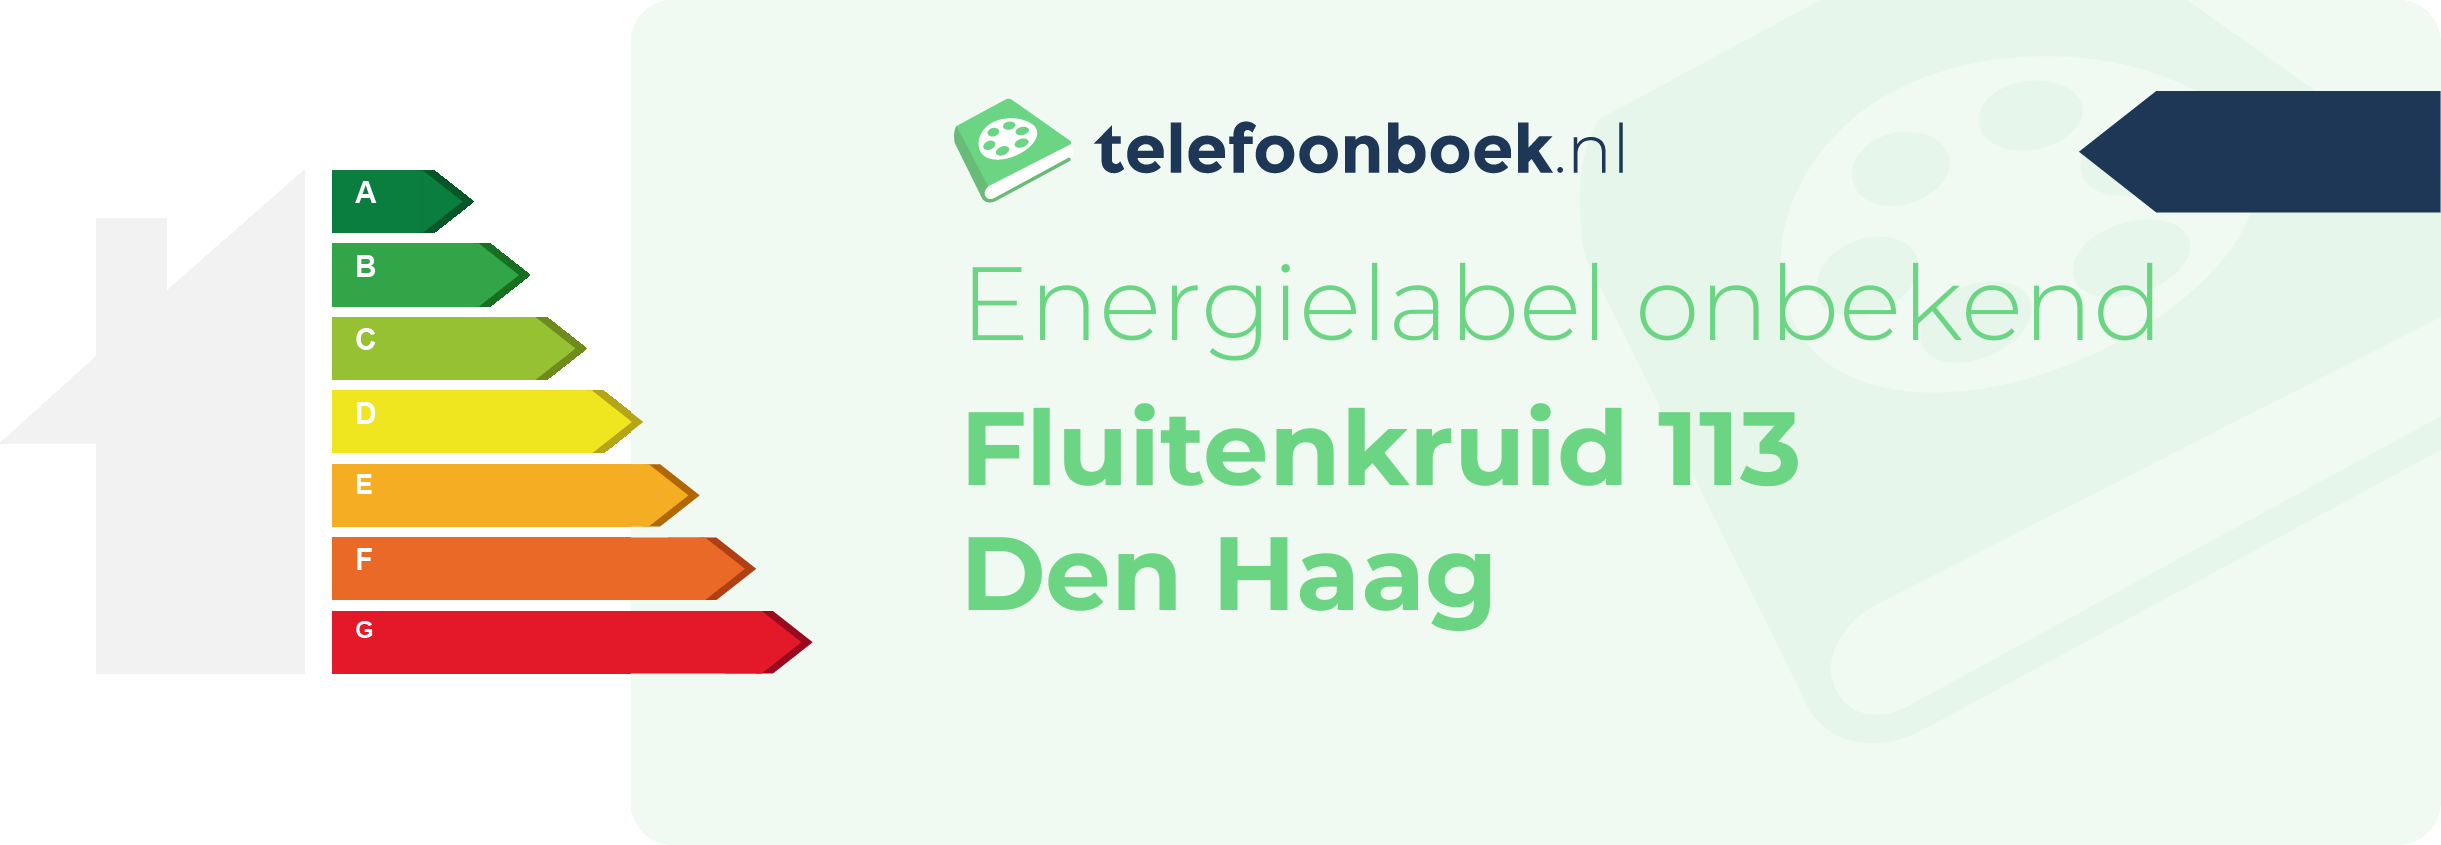 Energielabel Fluitenkruid 113 Den Haag